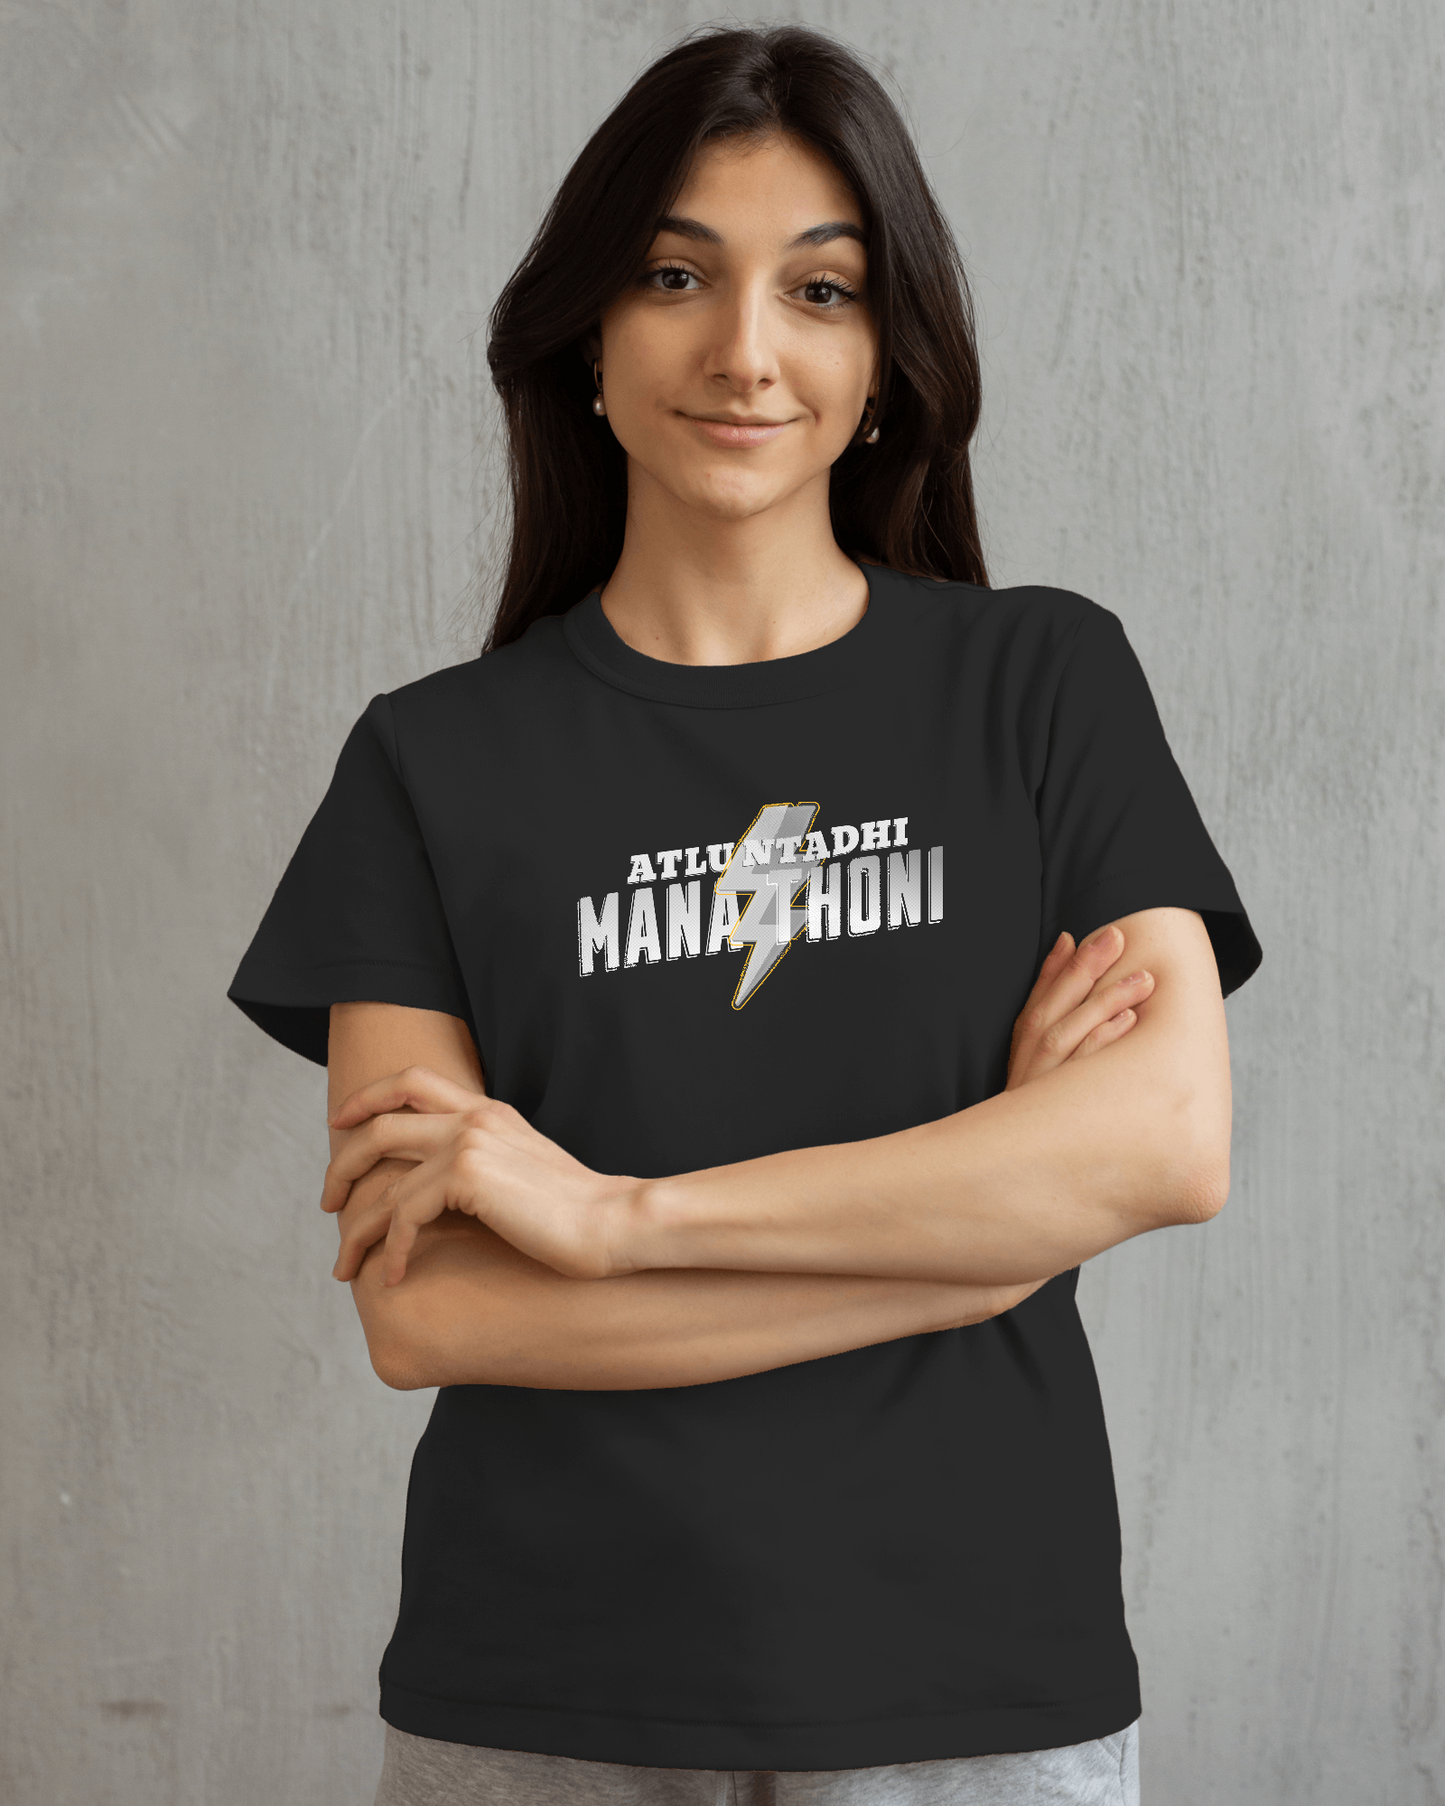 Atluntadhi Manathoni Unisex T-shirt